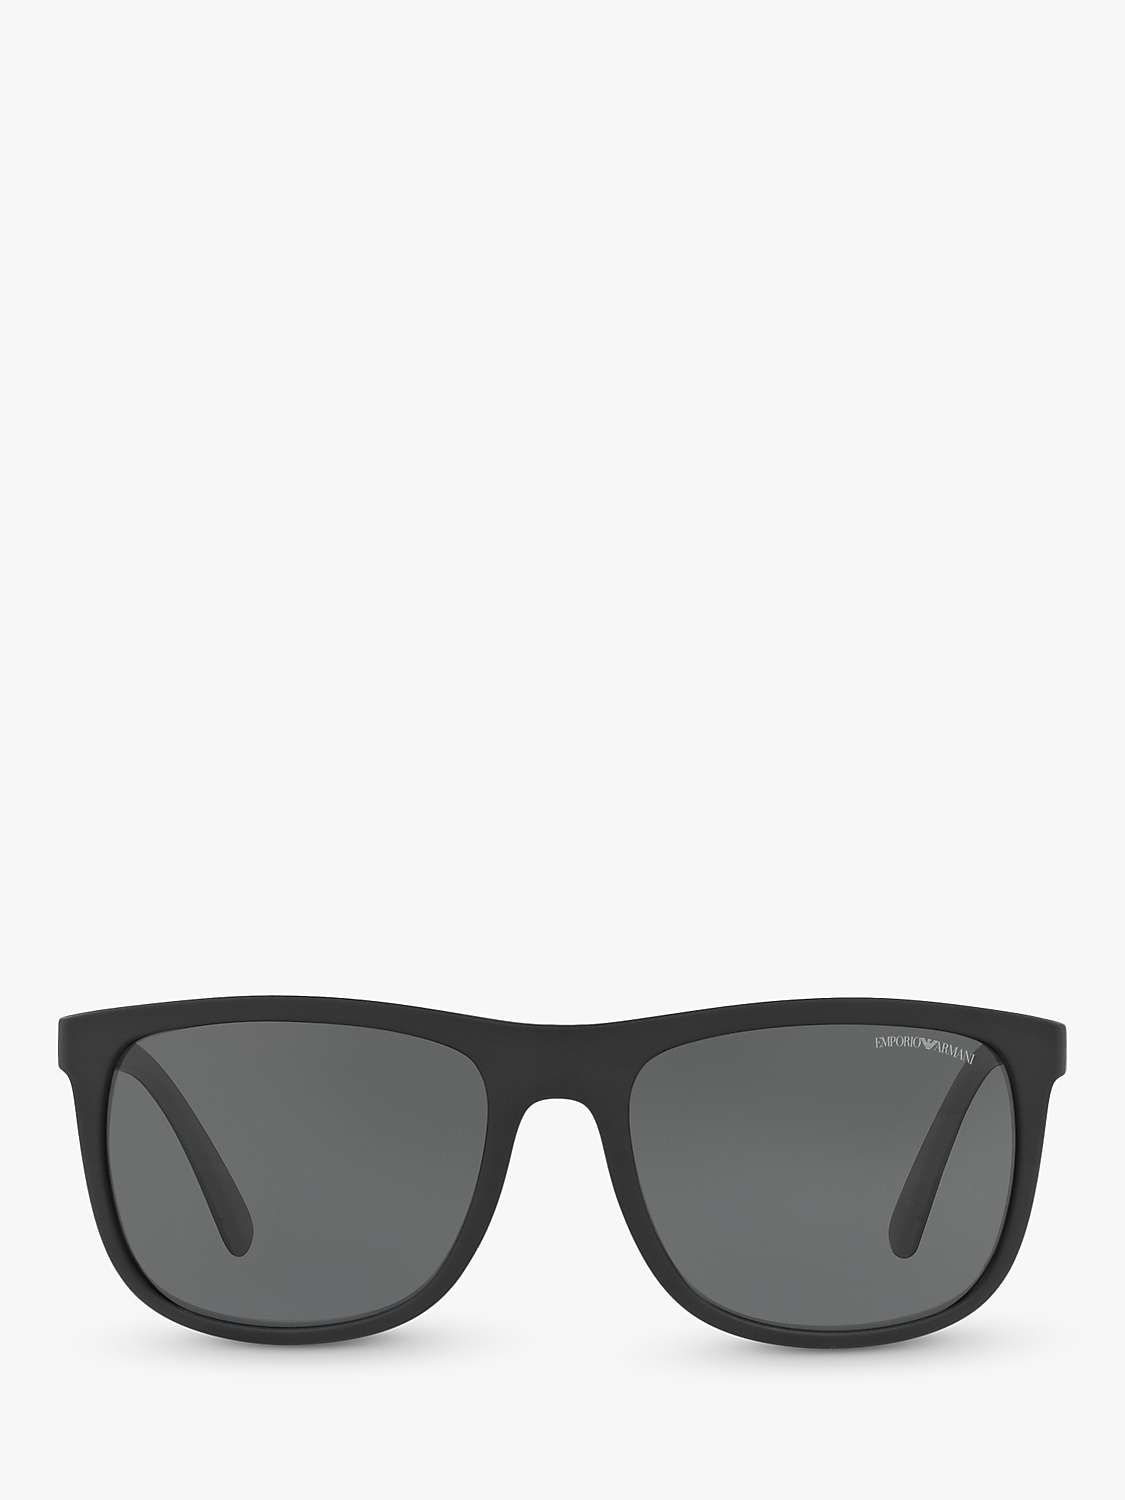 Buy Emporio Armani EA4079 Men's Square Sunglasses, Matte Black/Grey Online at johnlewis.com